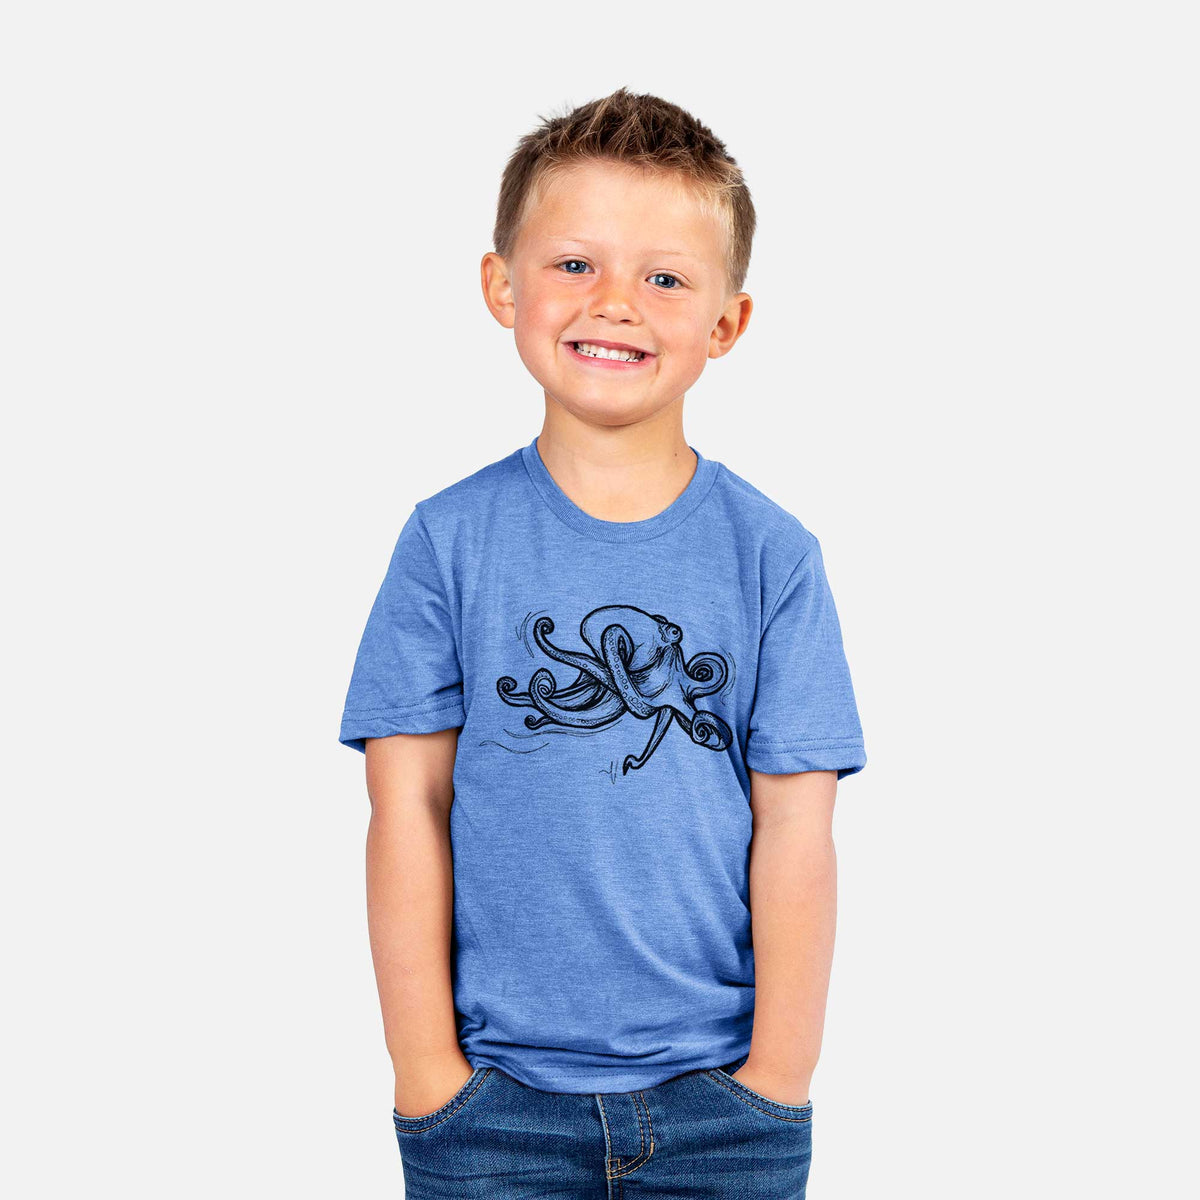 Giant Pacific Octopus - Kids Shirt